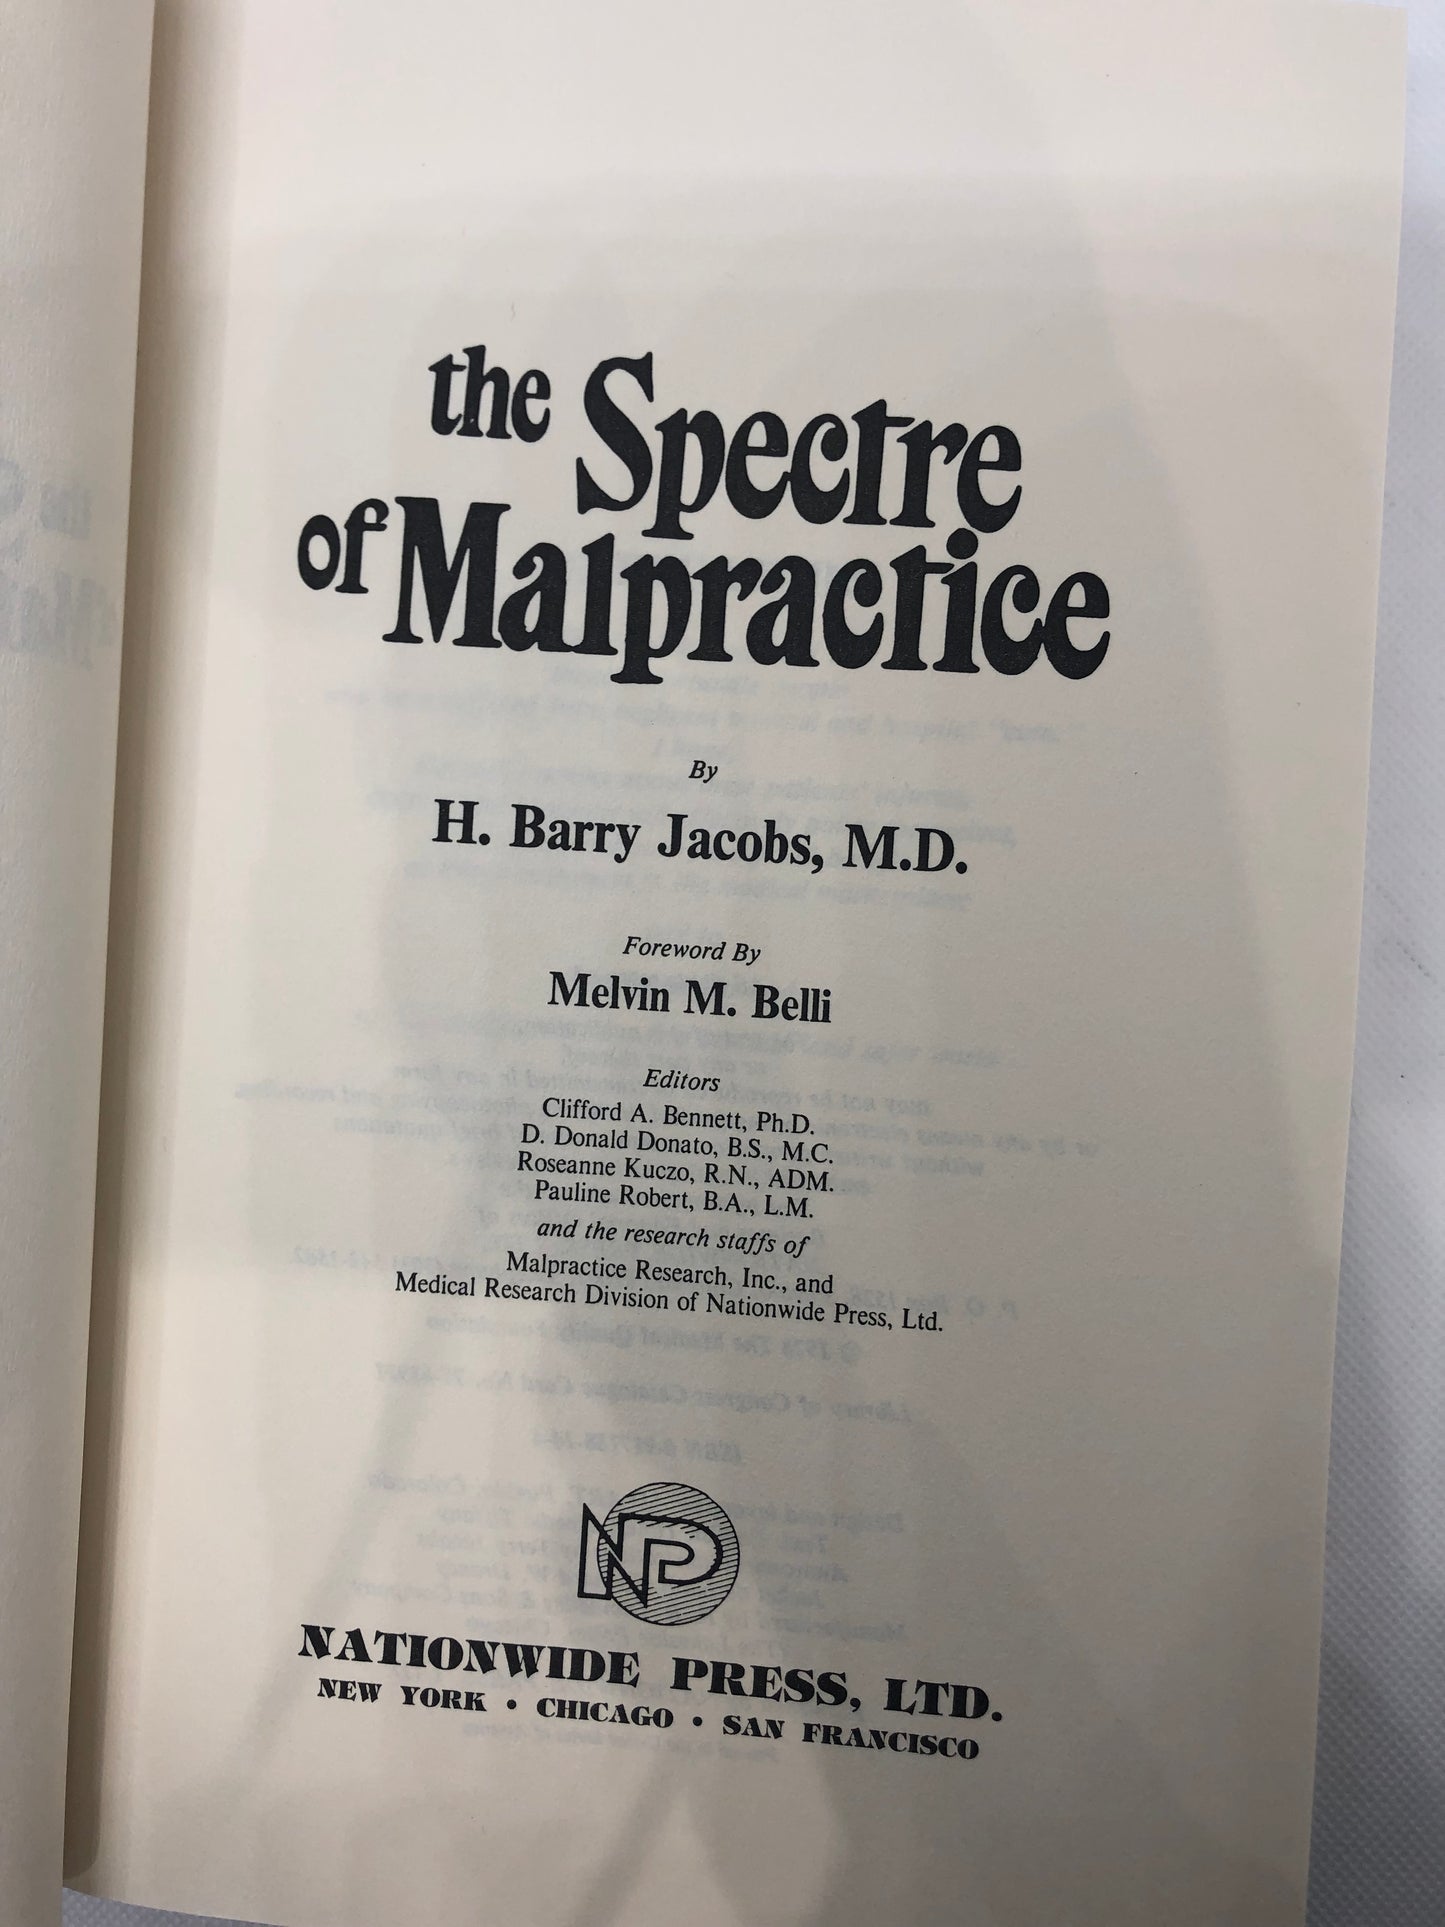 The Spectre of Malpractice (Hardcover)